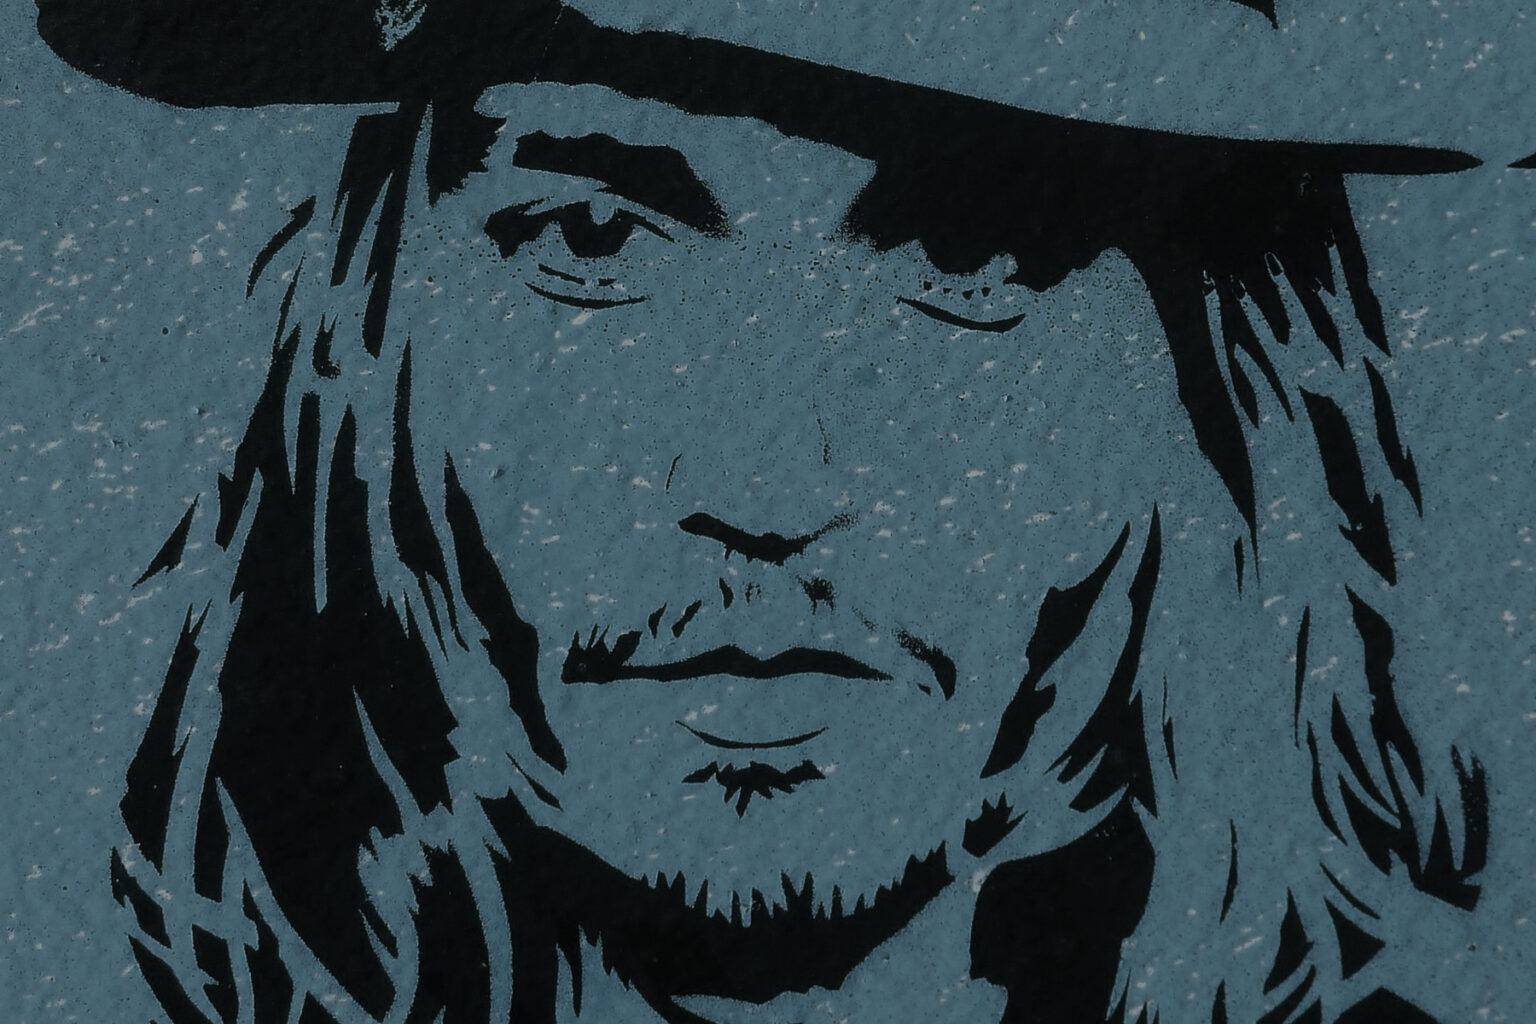 illustration of a likeness to Johnny Depp